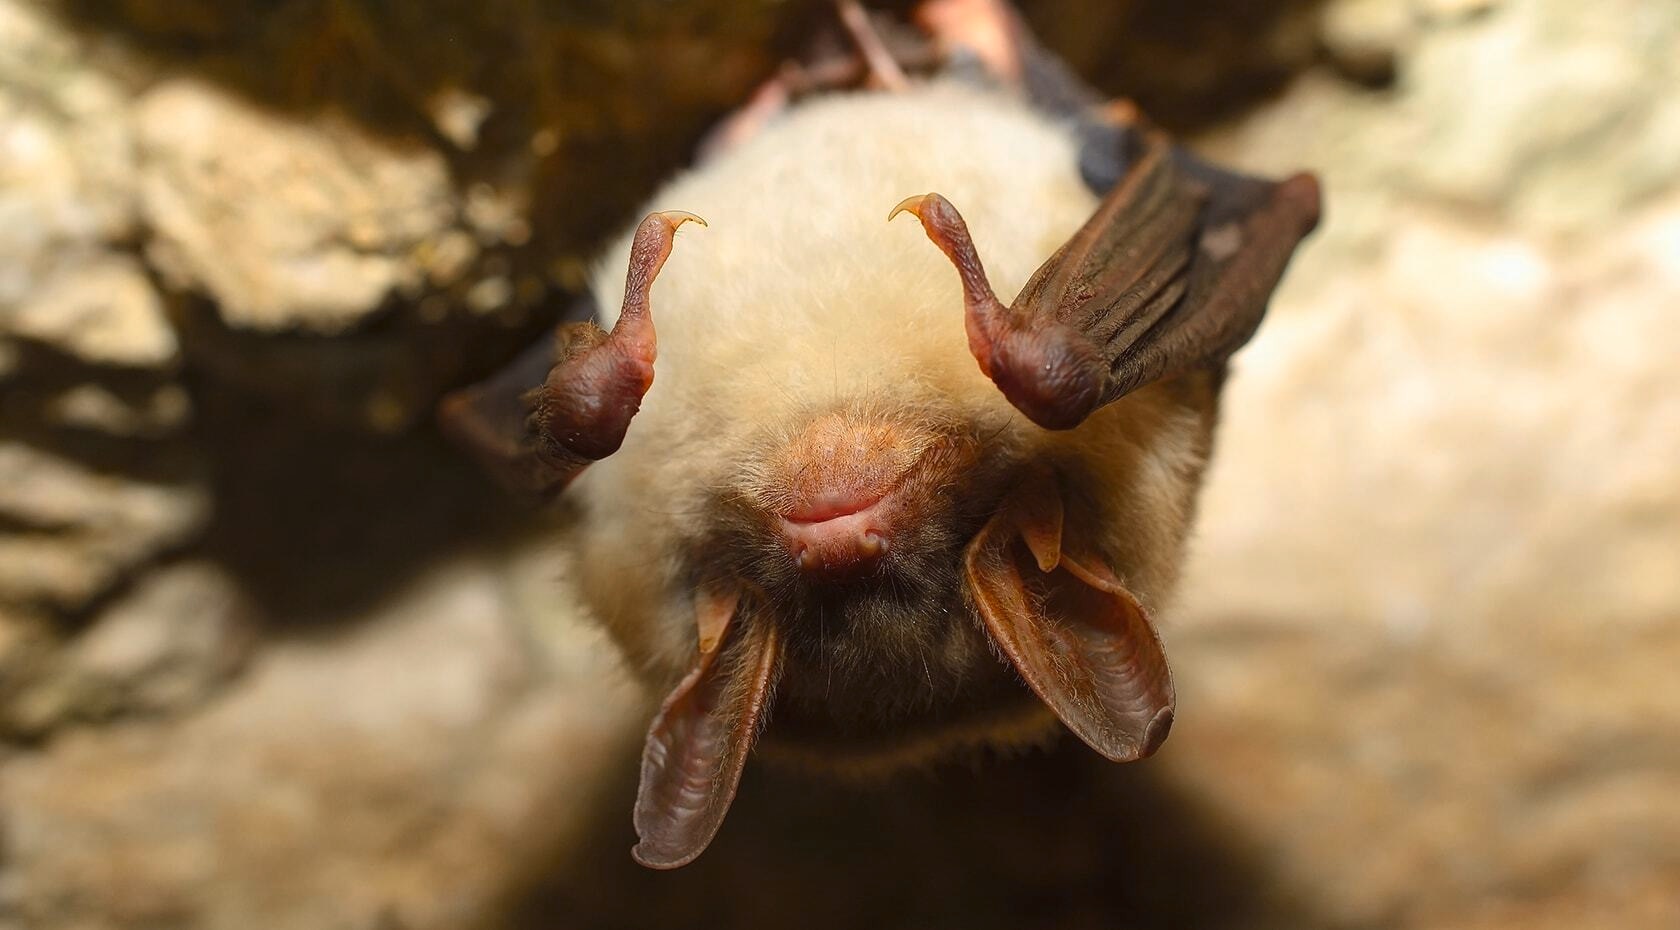 bats eating bugs